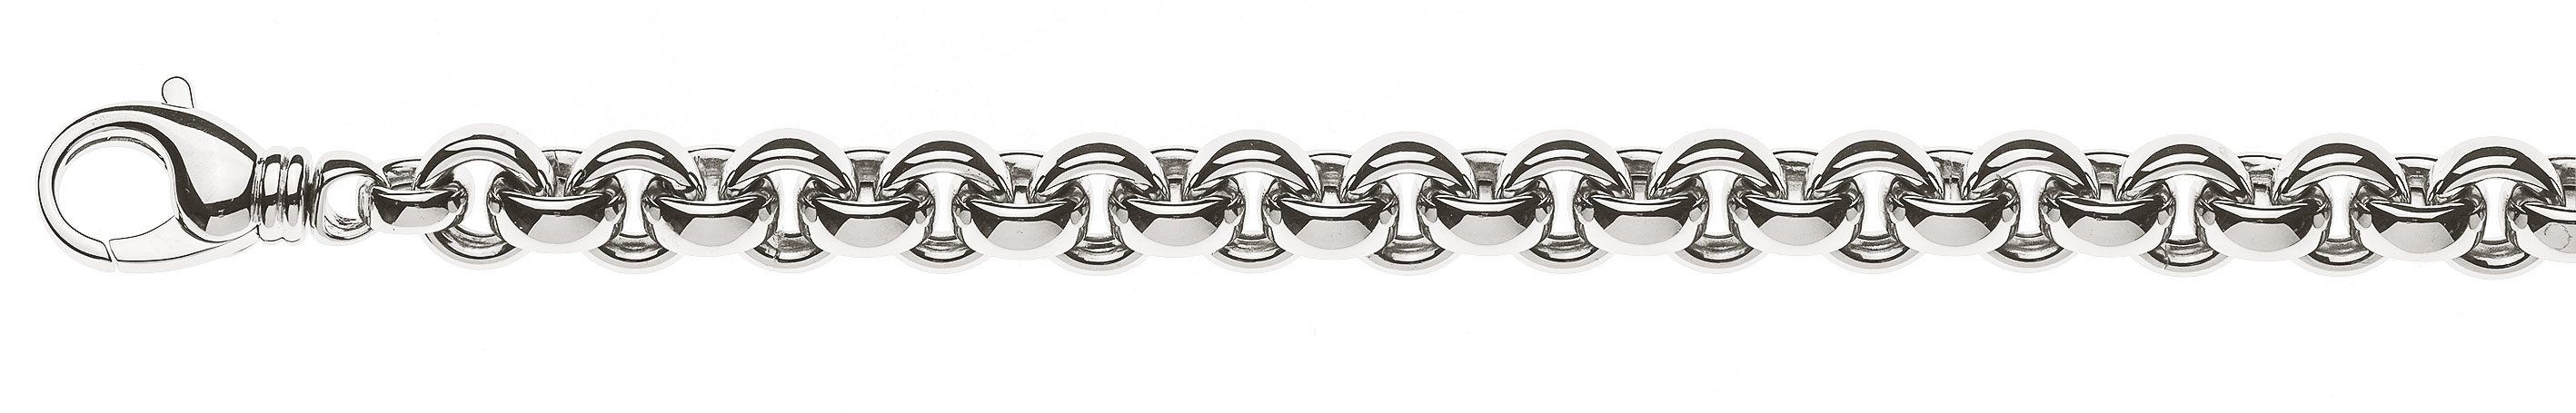 AURONOS Prestige Necklace white gold 18K handmade pea chain 45cm 9.5mm